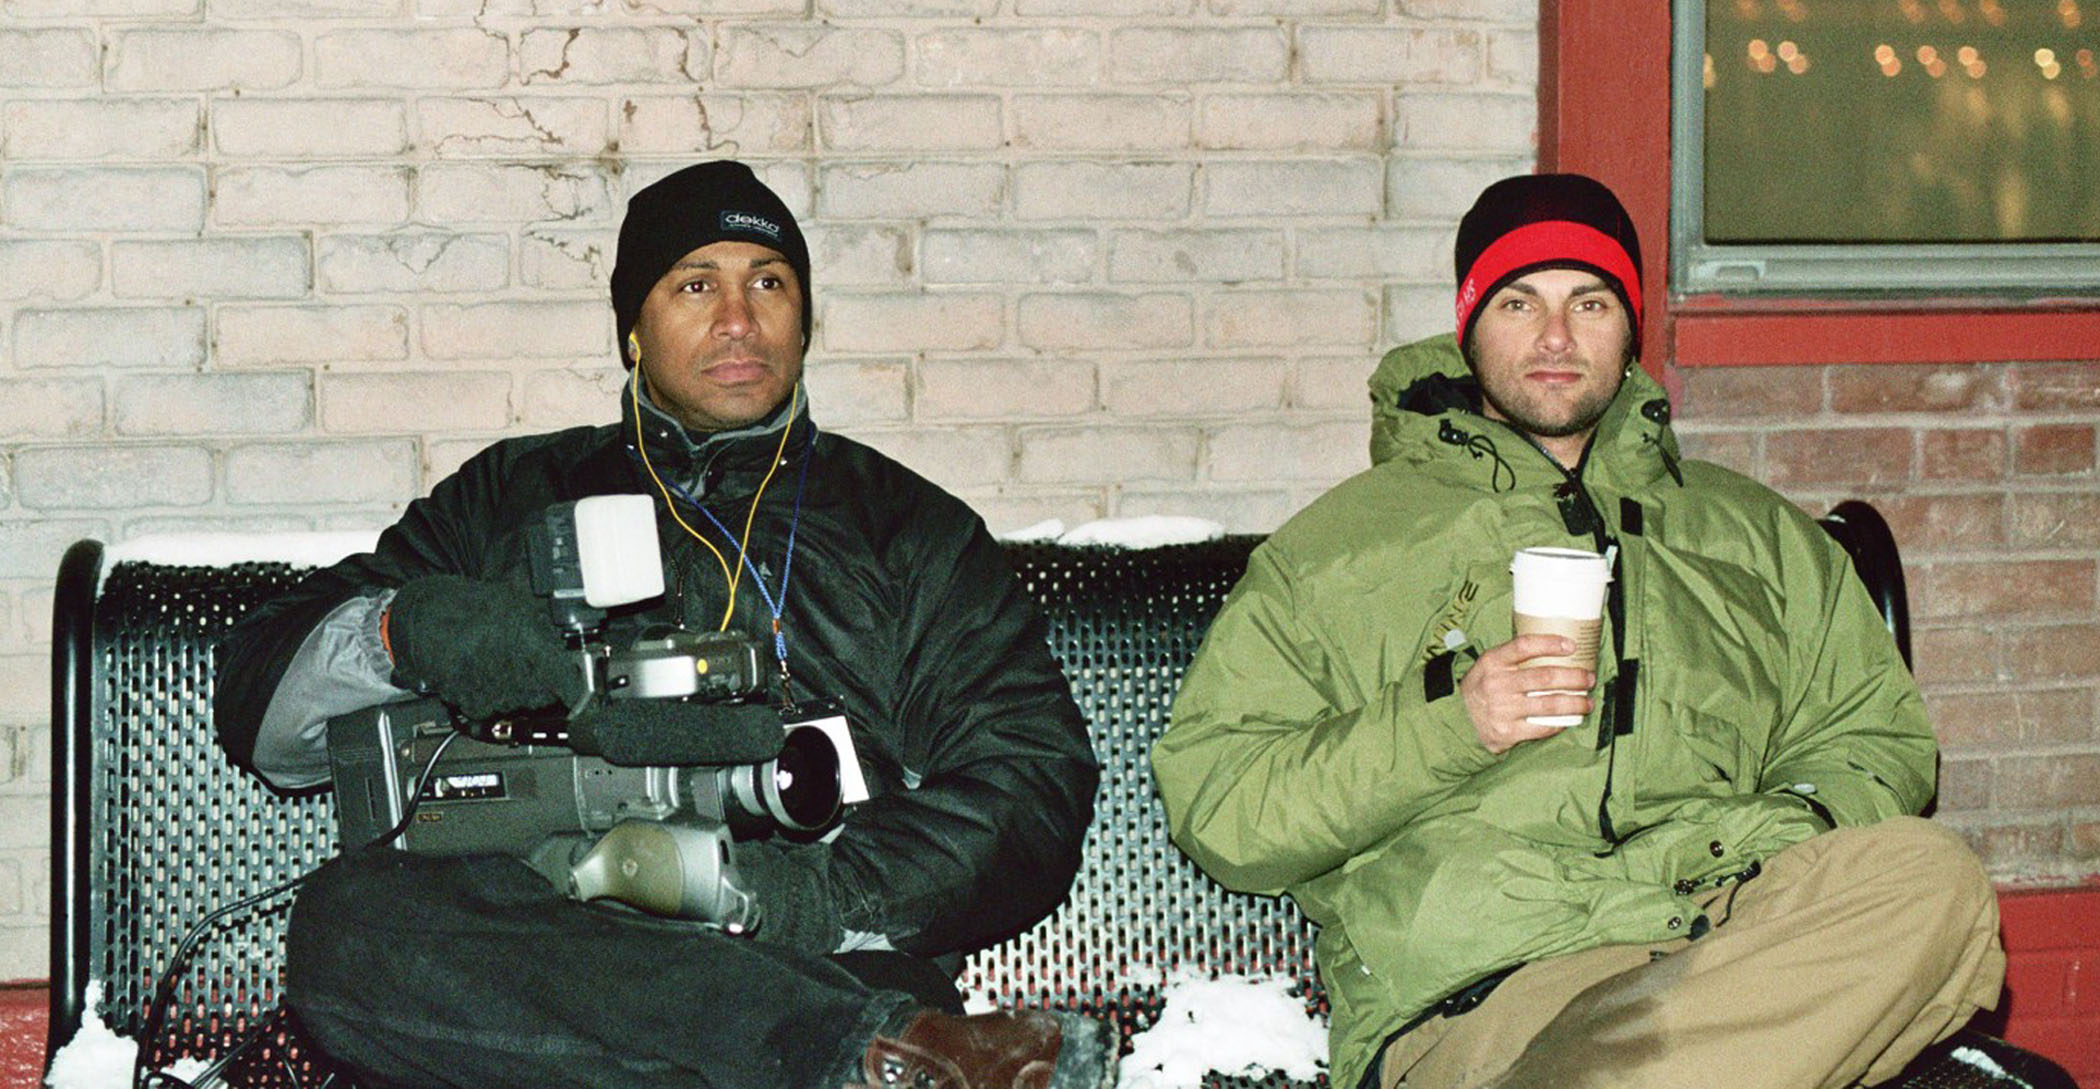 Julian and cameraman Adam Tash filming at Sundance.